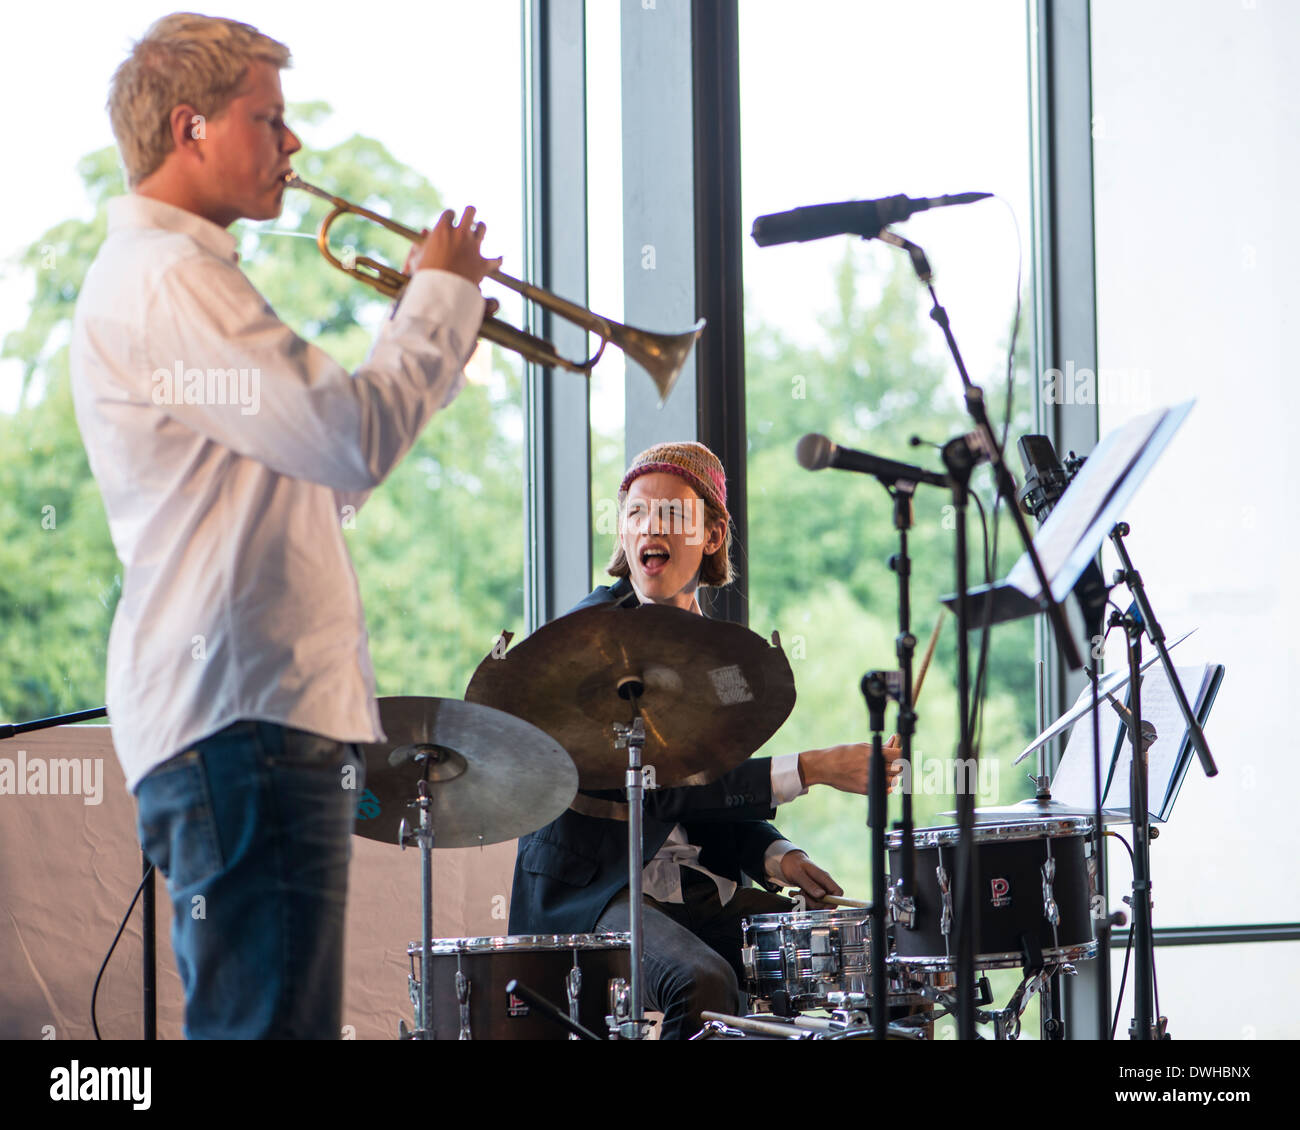 Opening act of the Copenhagen Jazz Festival 2013 Stock Photo